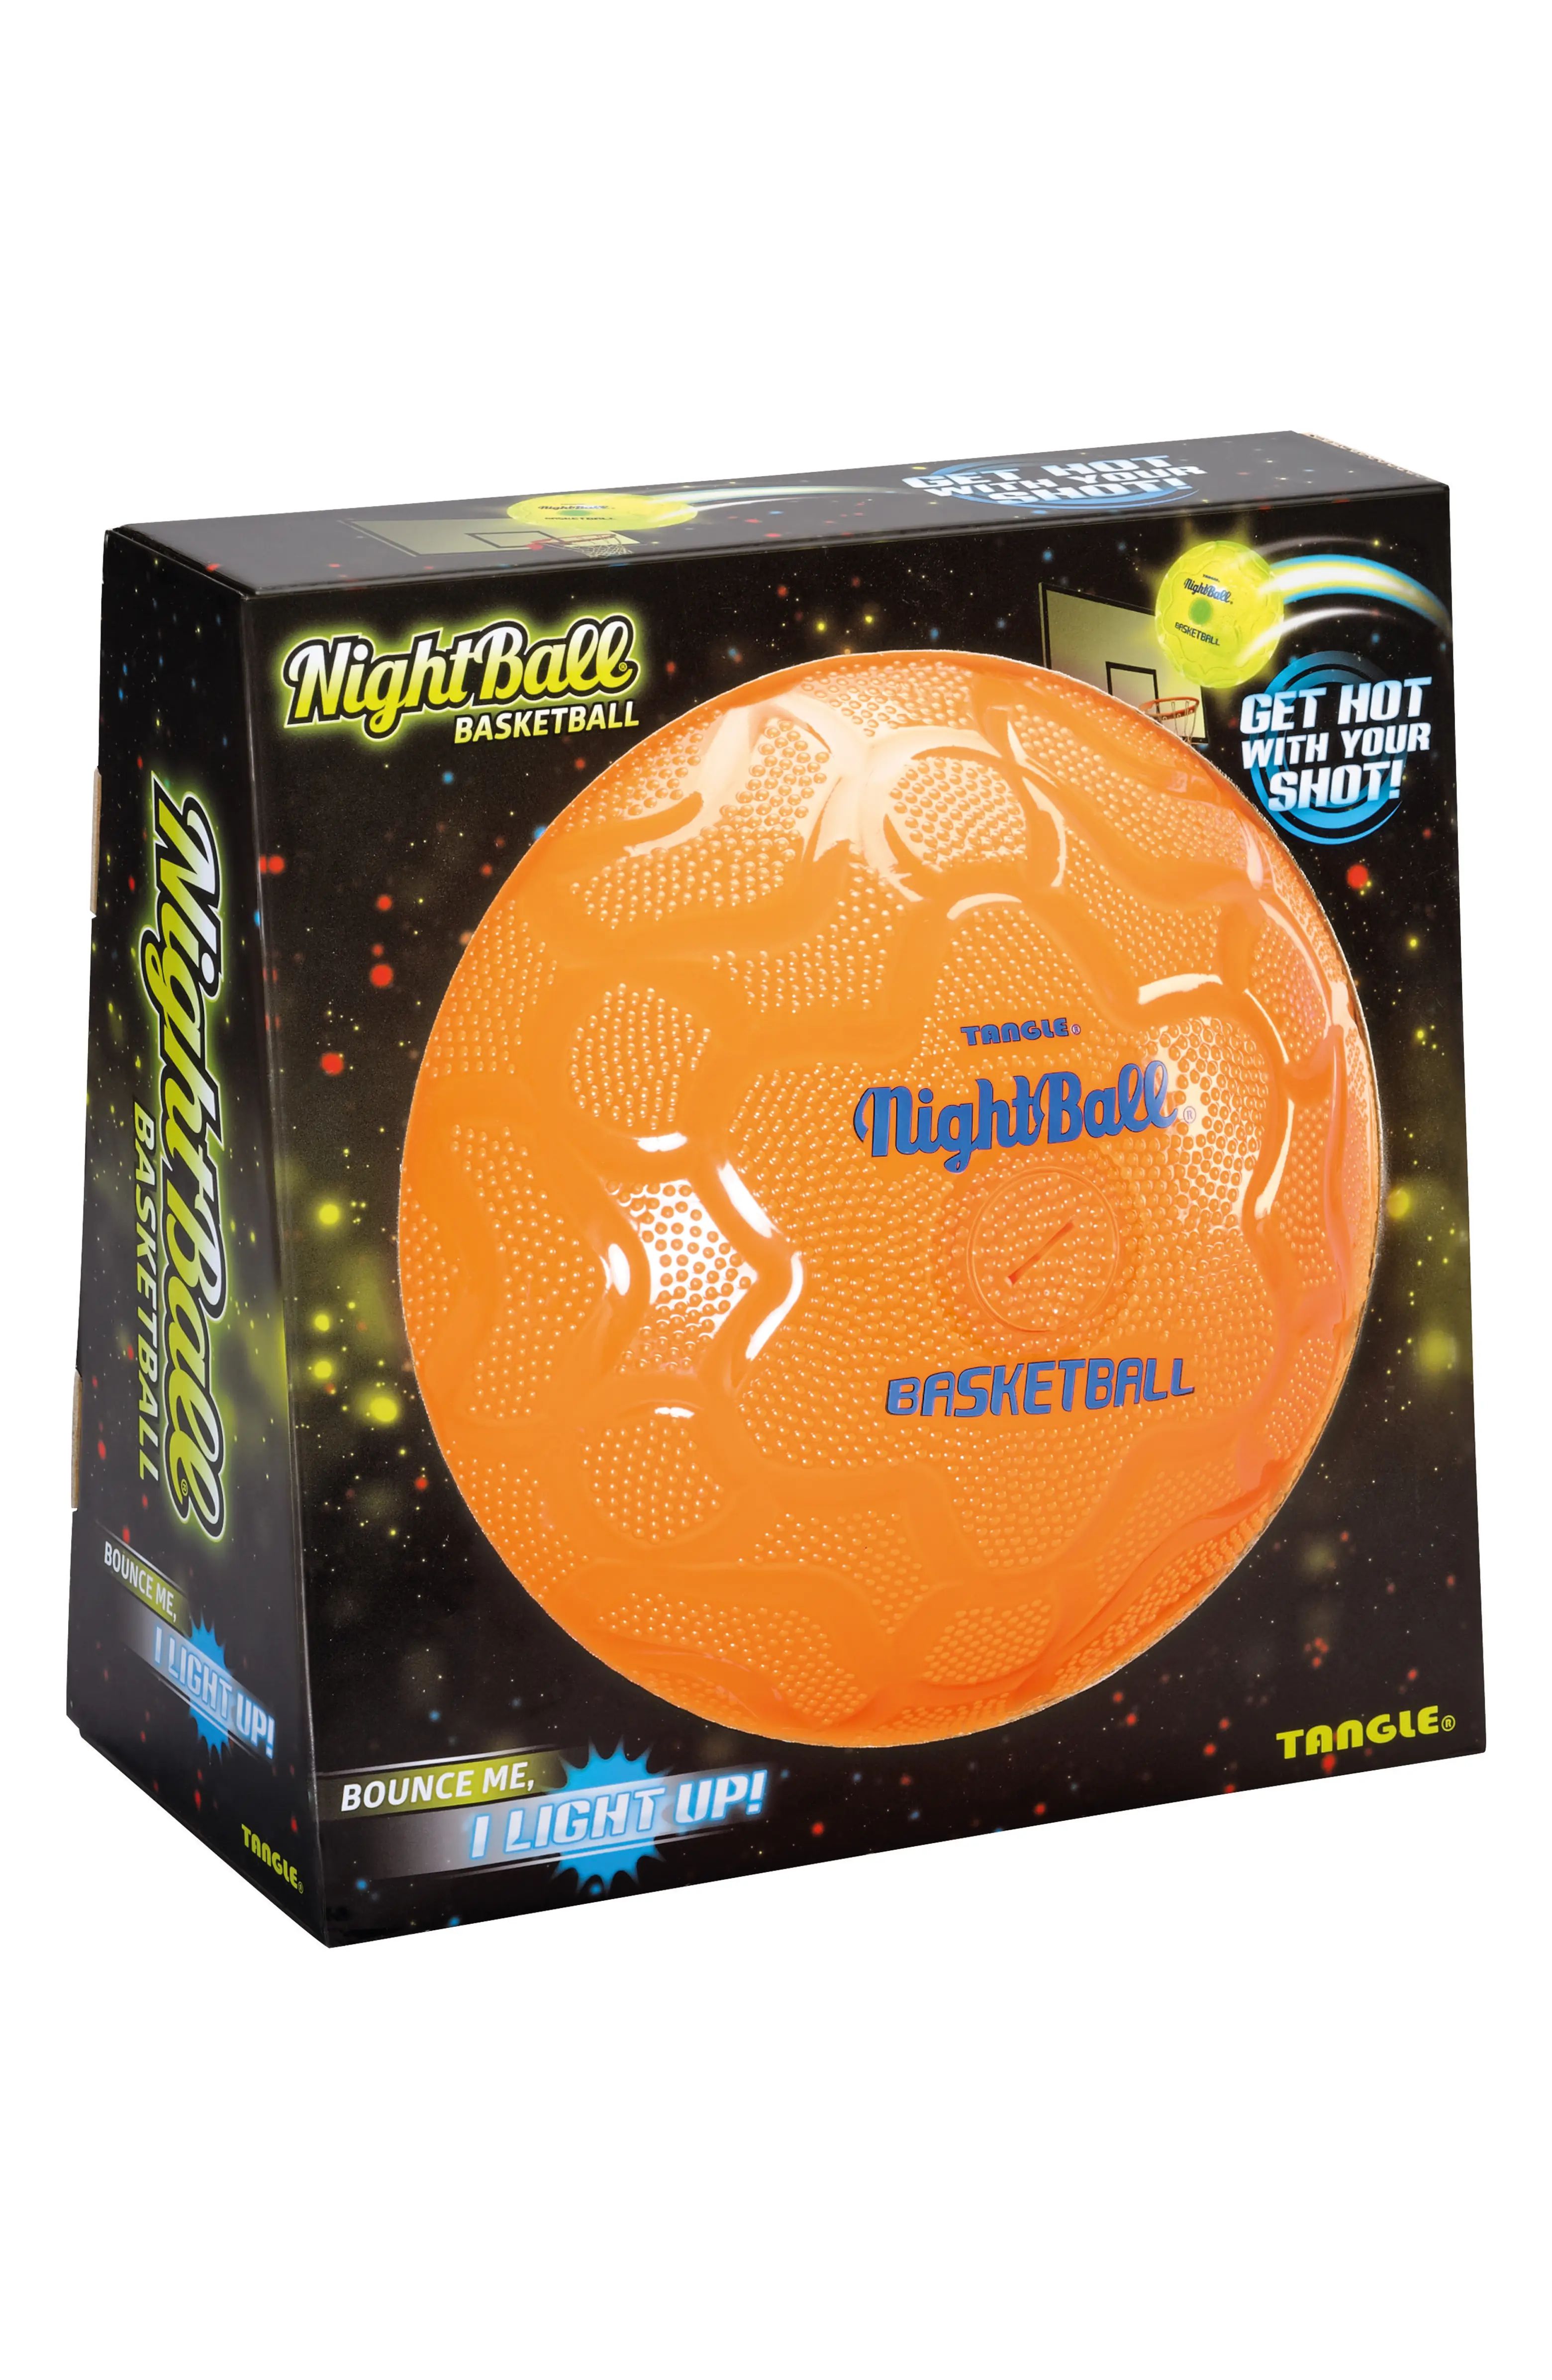 NightBall Basketball | Nordstrom